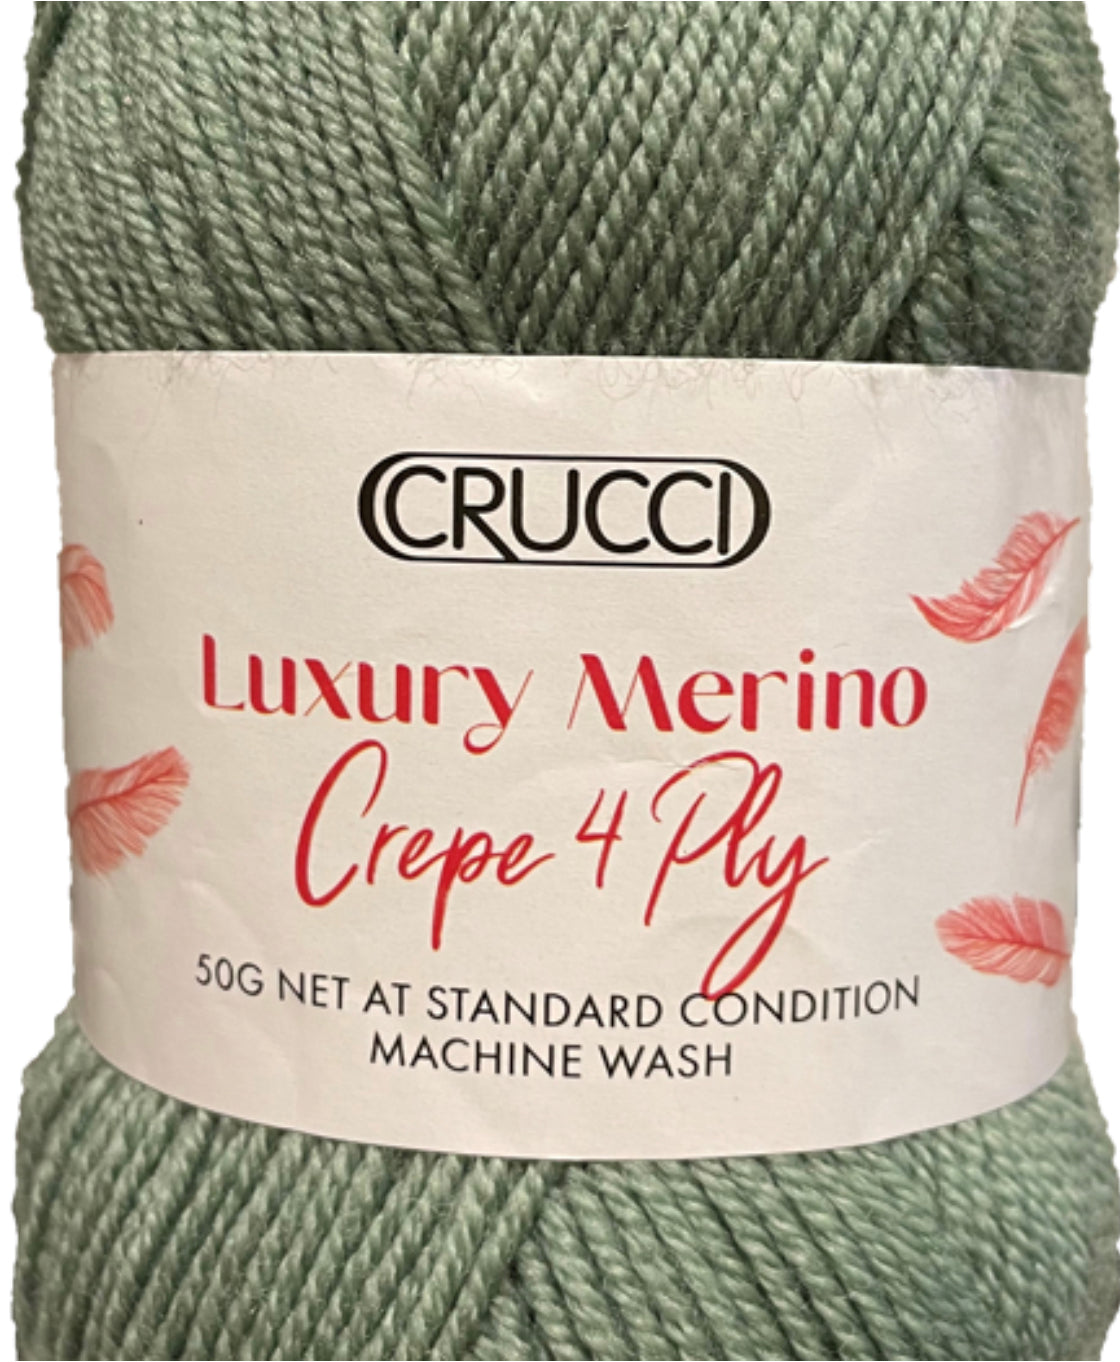 Crucci Luxury Merino Crepe 4ply Wool